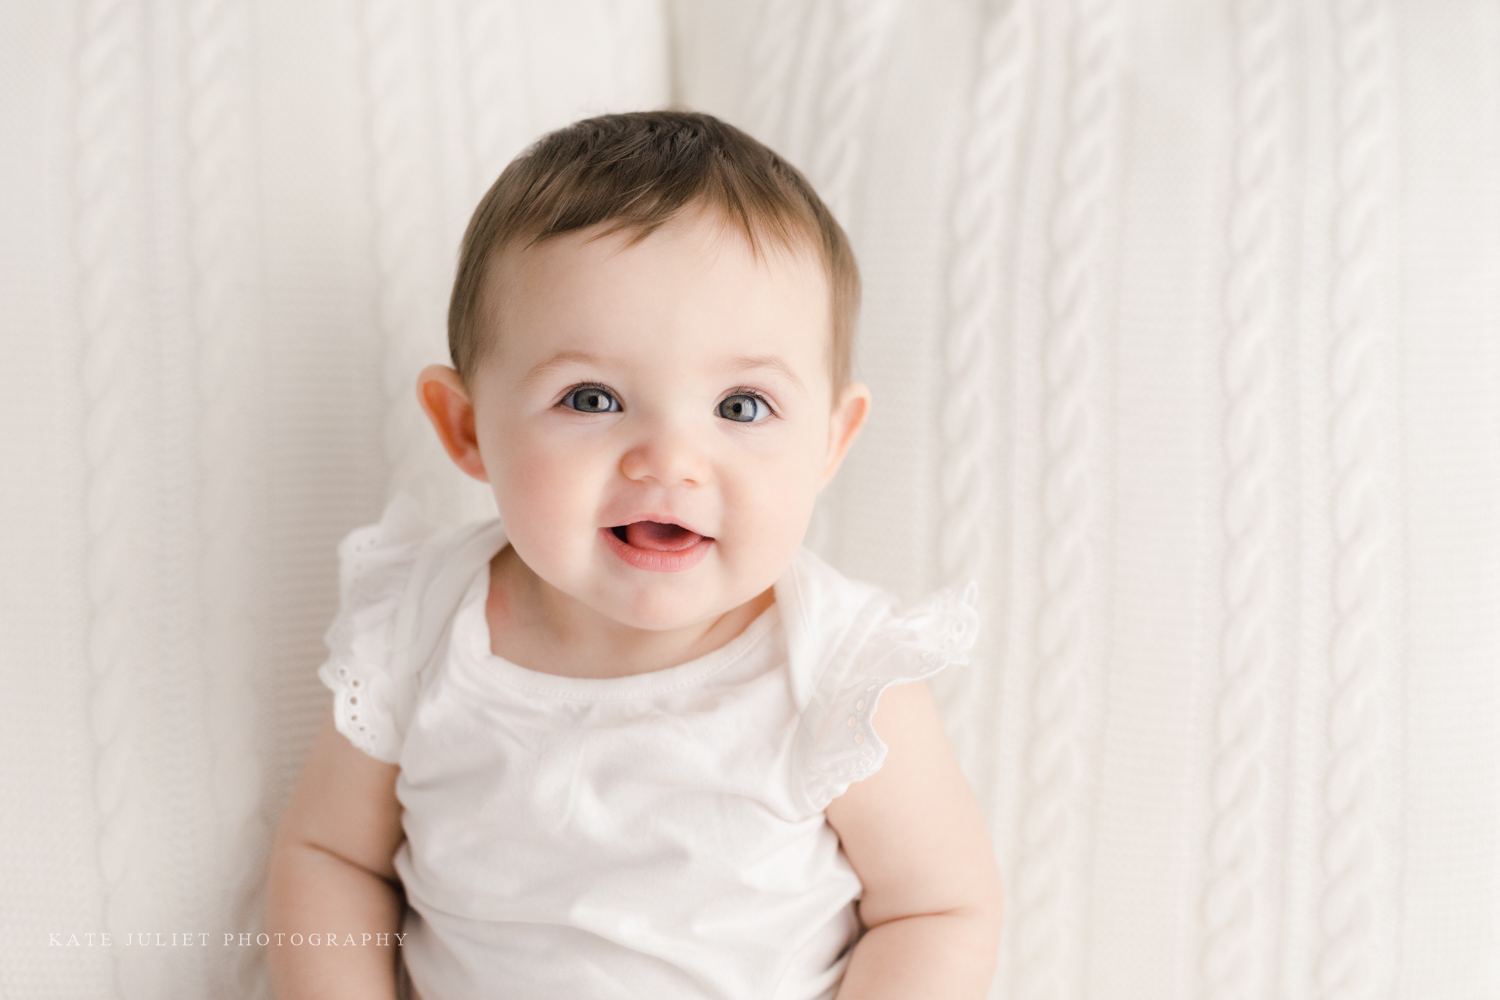 Washington DC Baby Photographer | Kate Juliet Photography